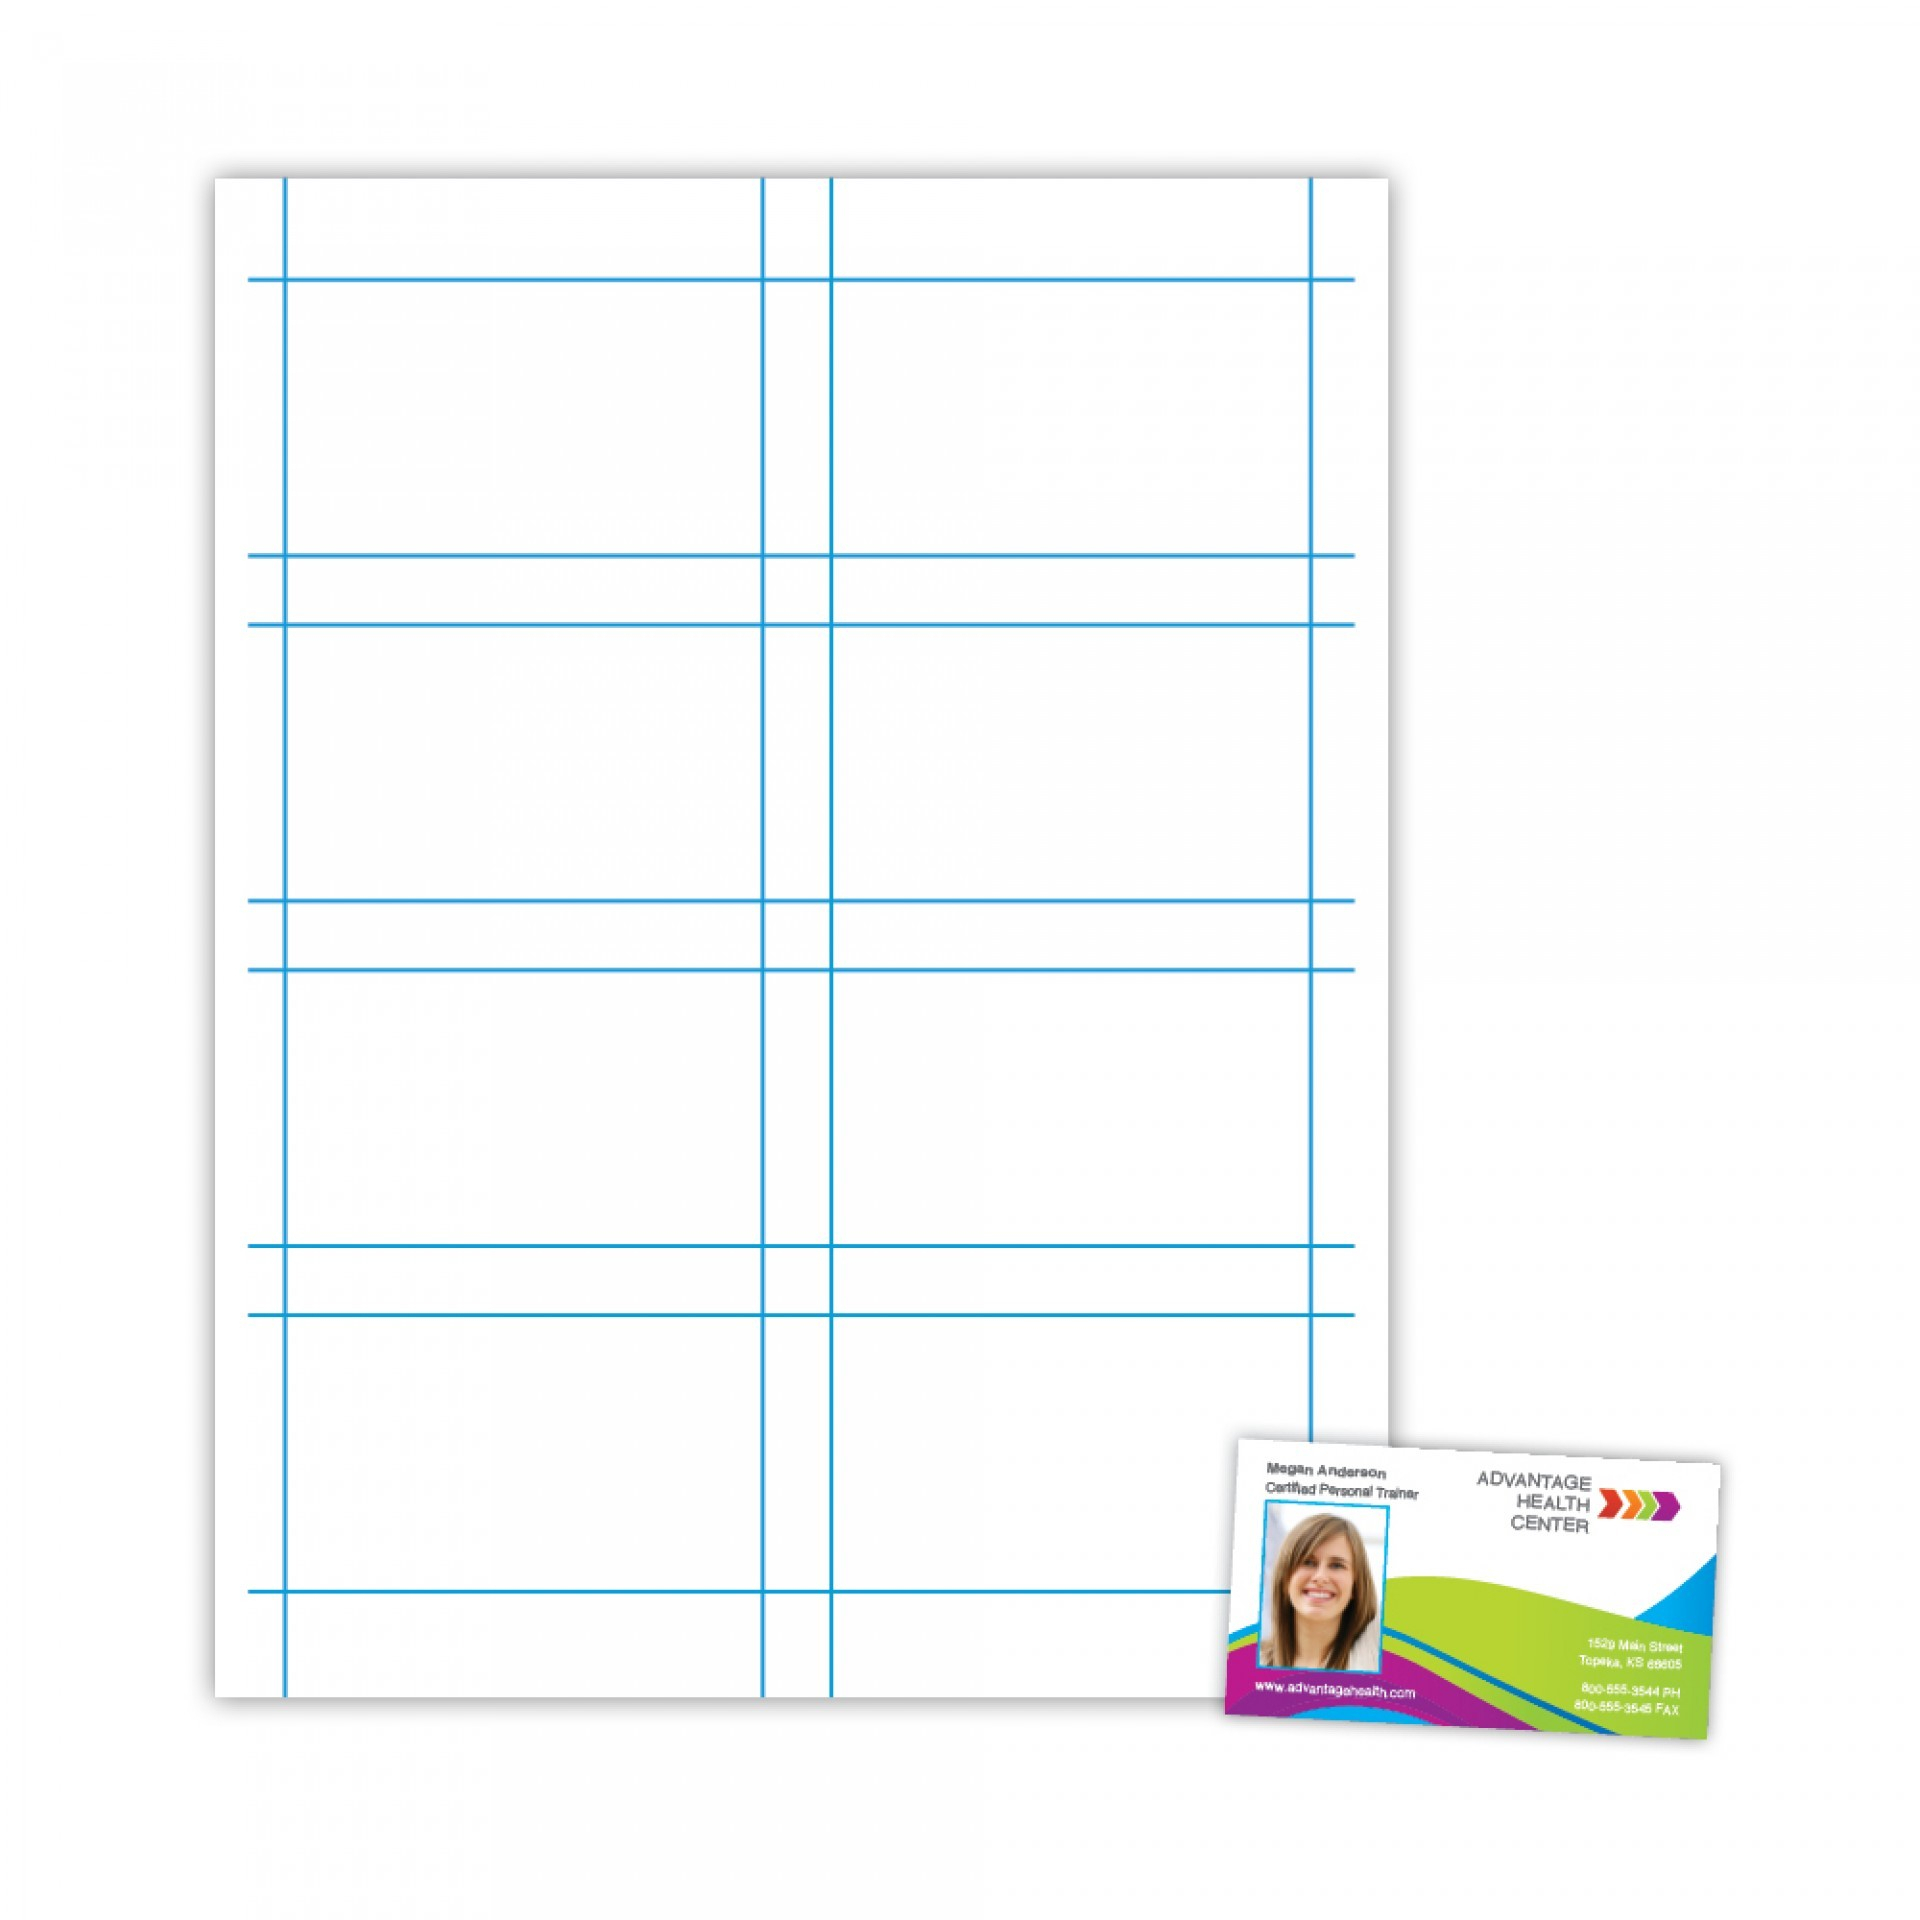 Business Card Template Free Blank | Creative Atoms Inside Blank Business Card Template For Word